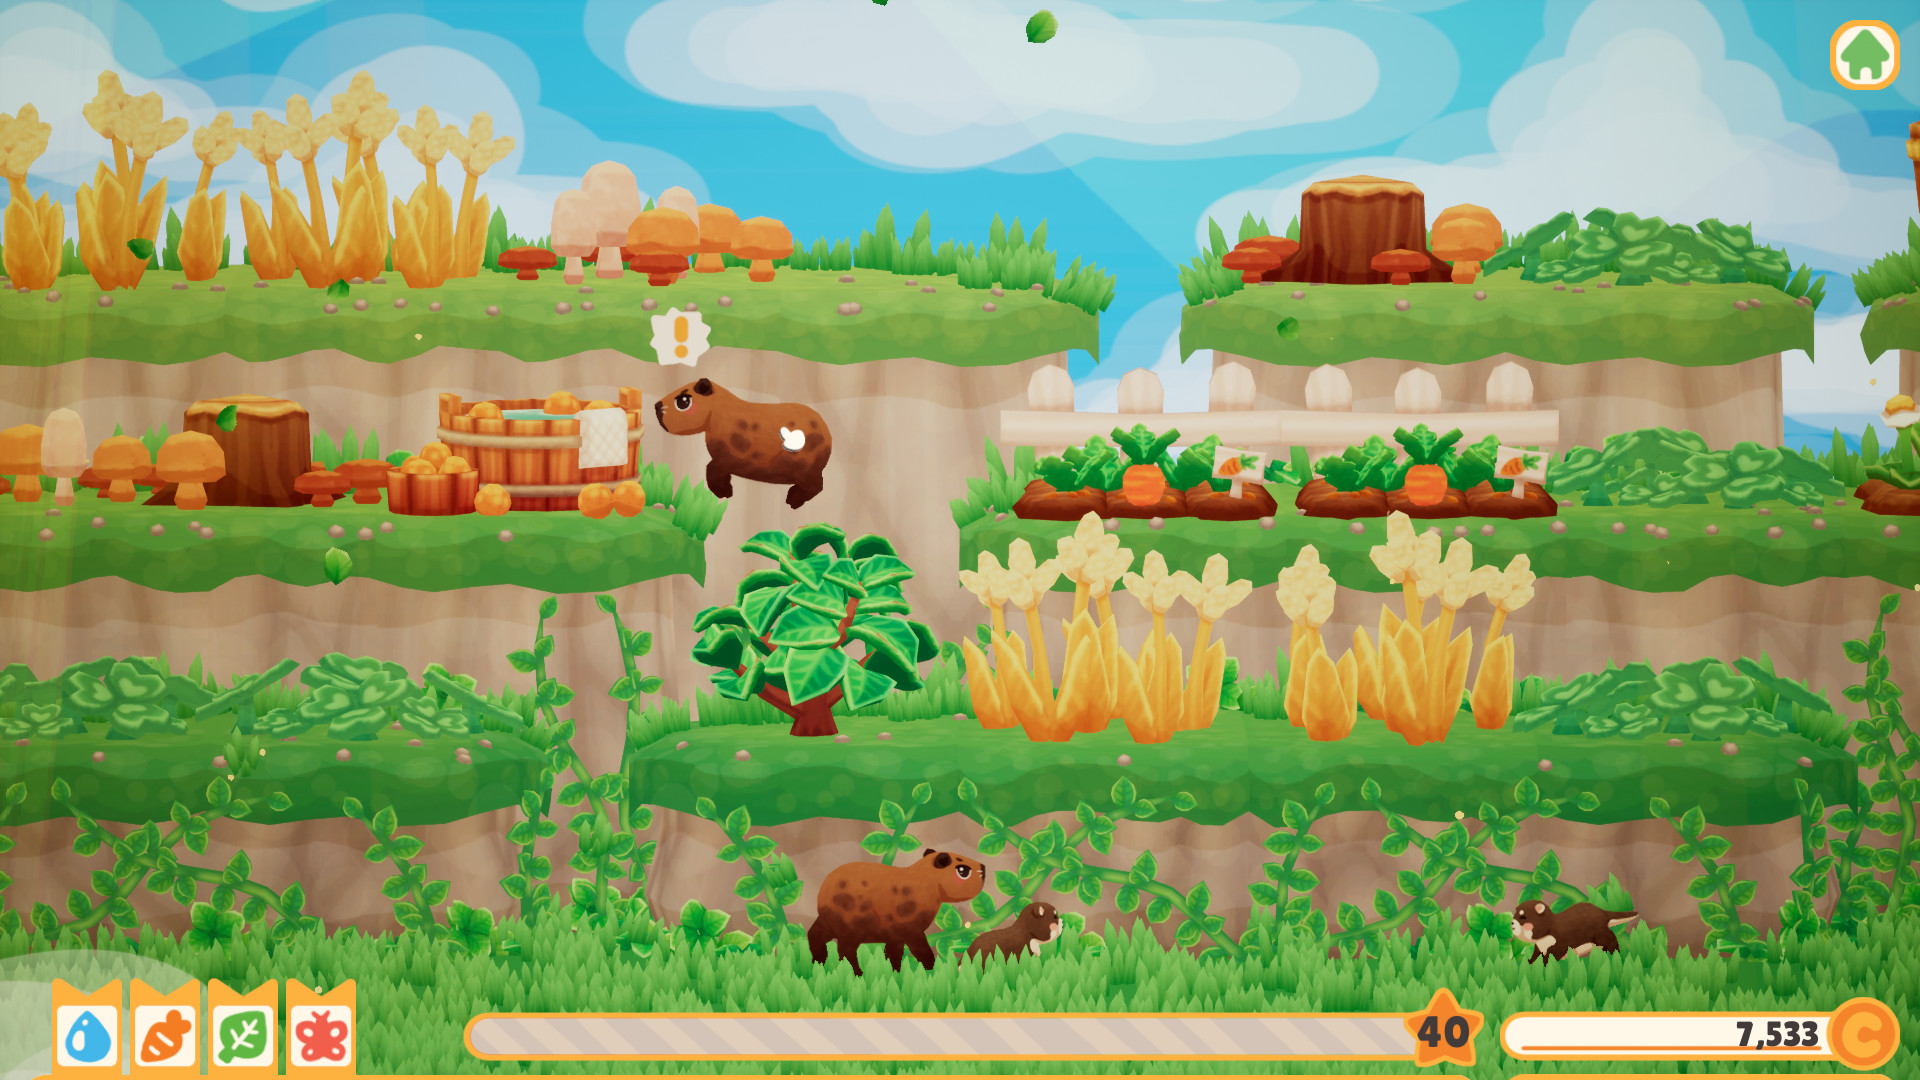 Capybara Spa on Steam